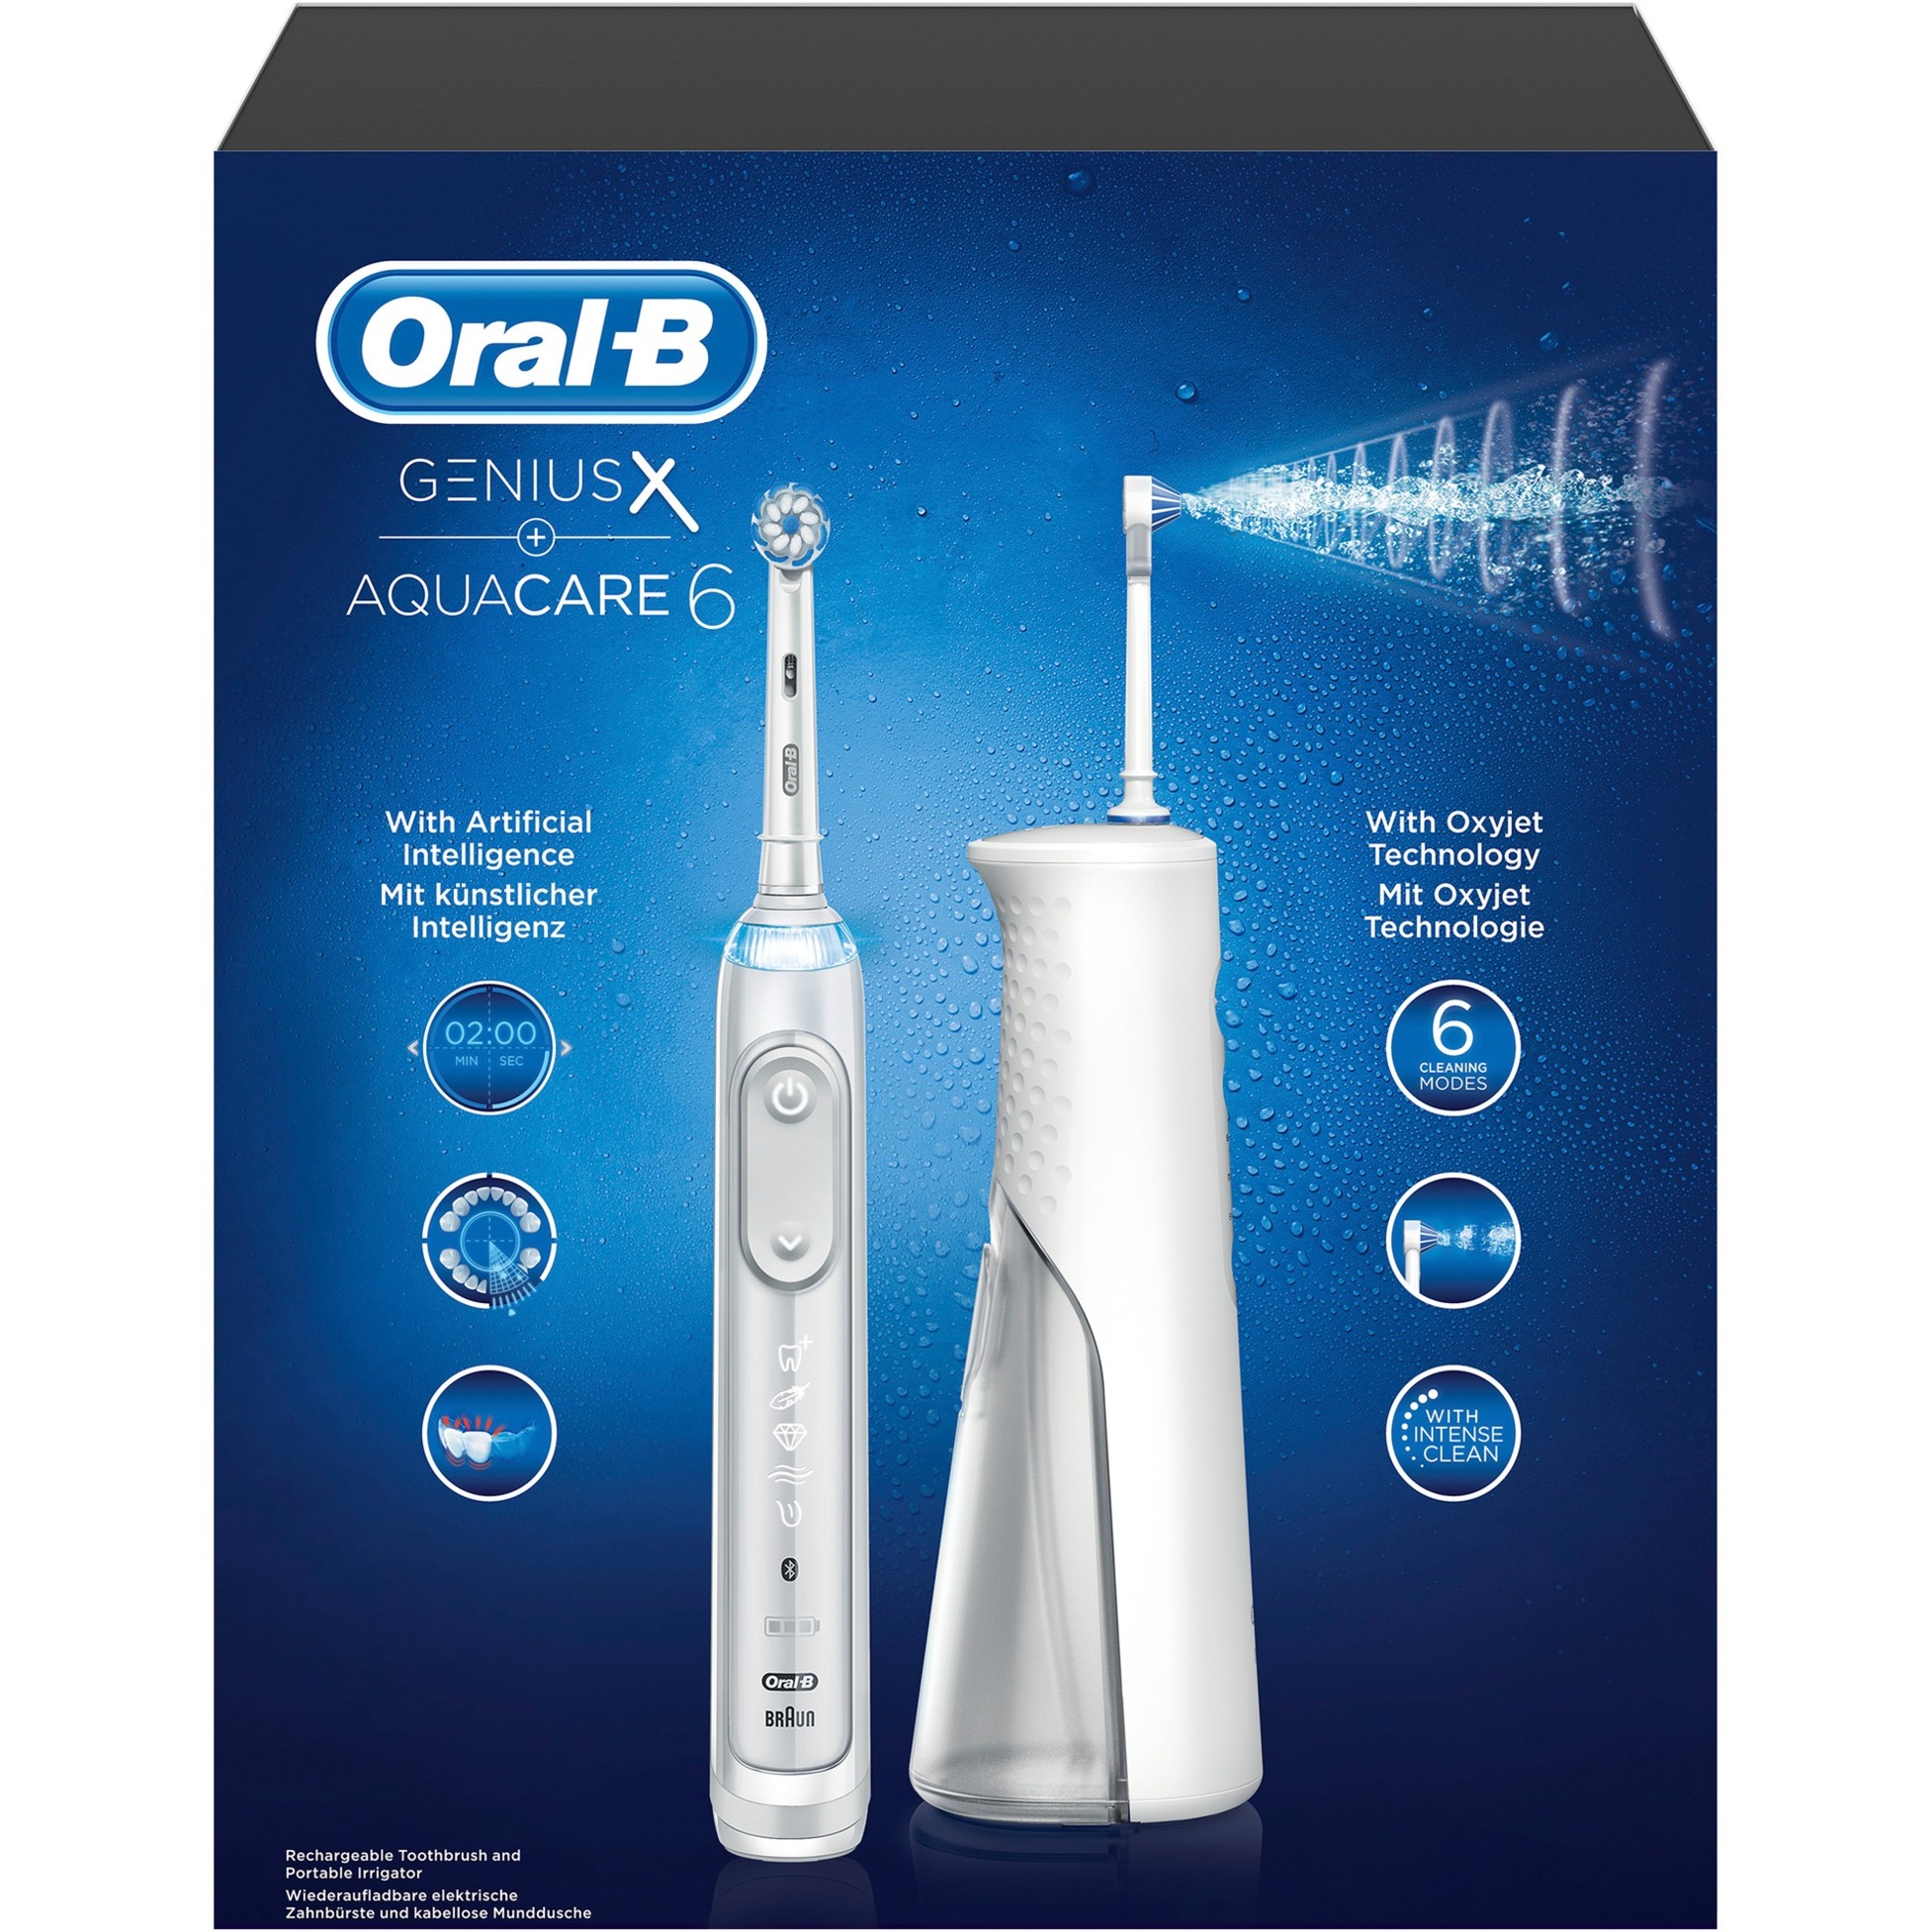 Image of Alternate - Oral-B Genius X + AquaCare 6 Pro-Expert, Mundpflege online einkaufen bei Alternate